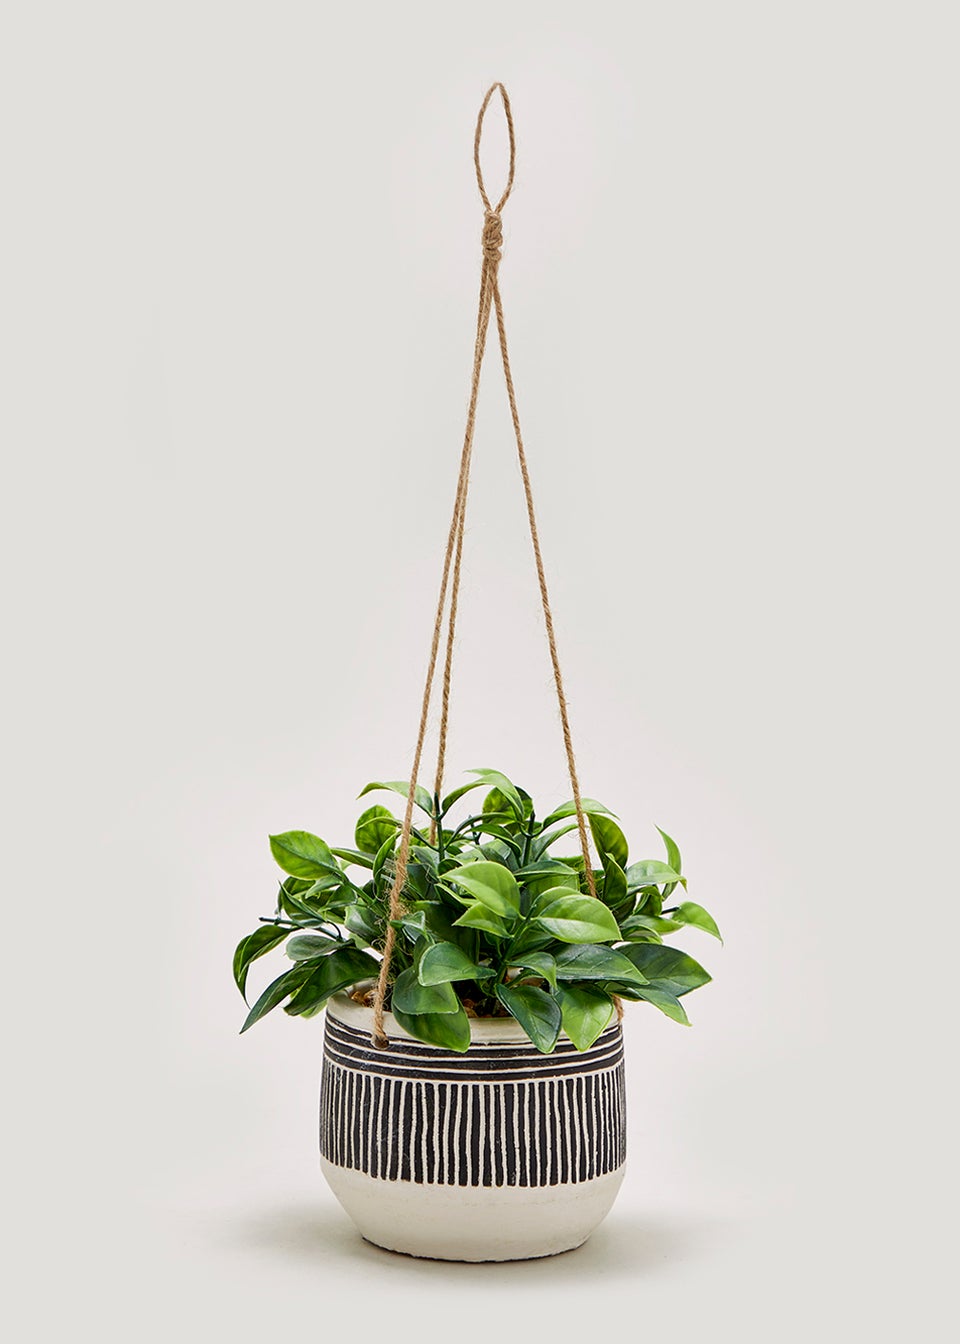 Hanging Plant in Pot (18cm)